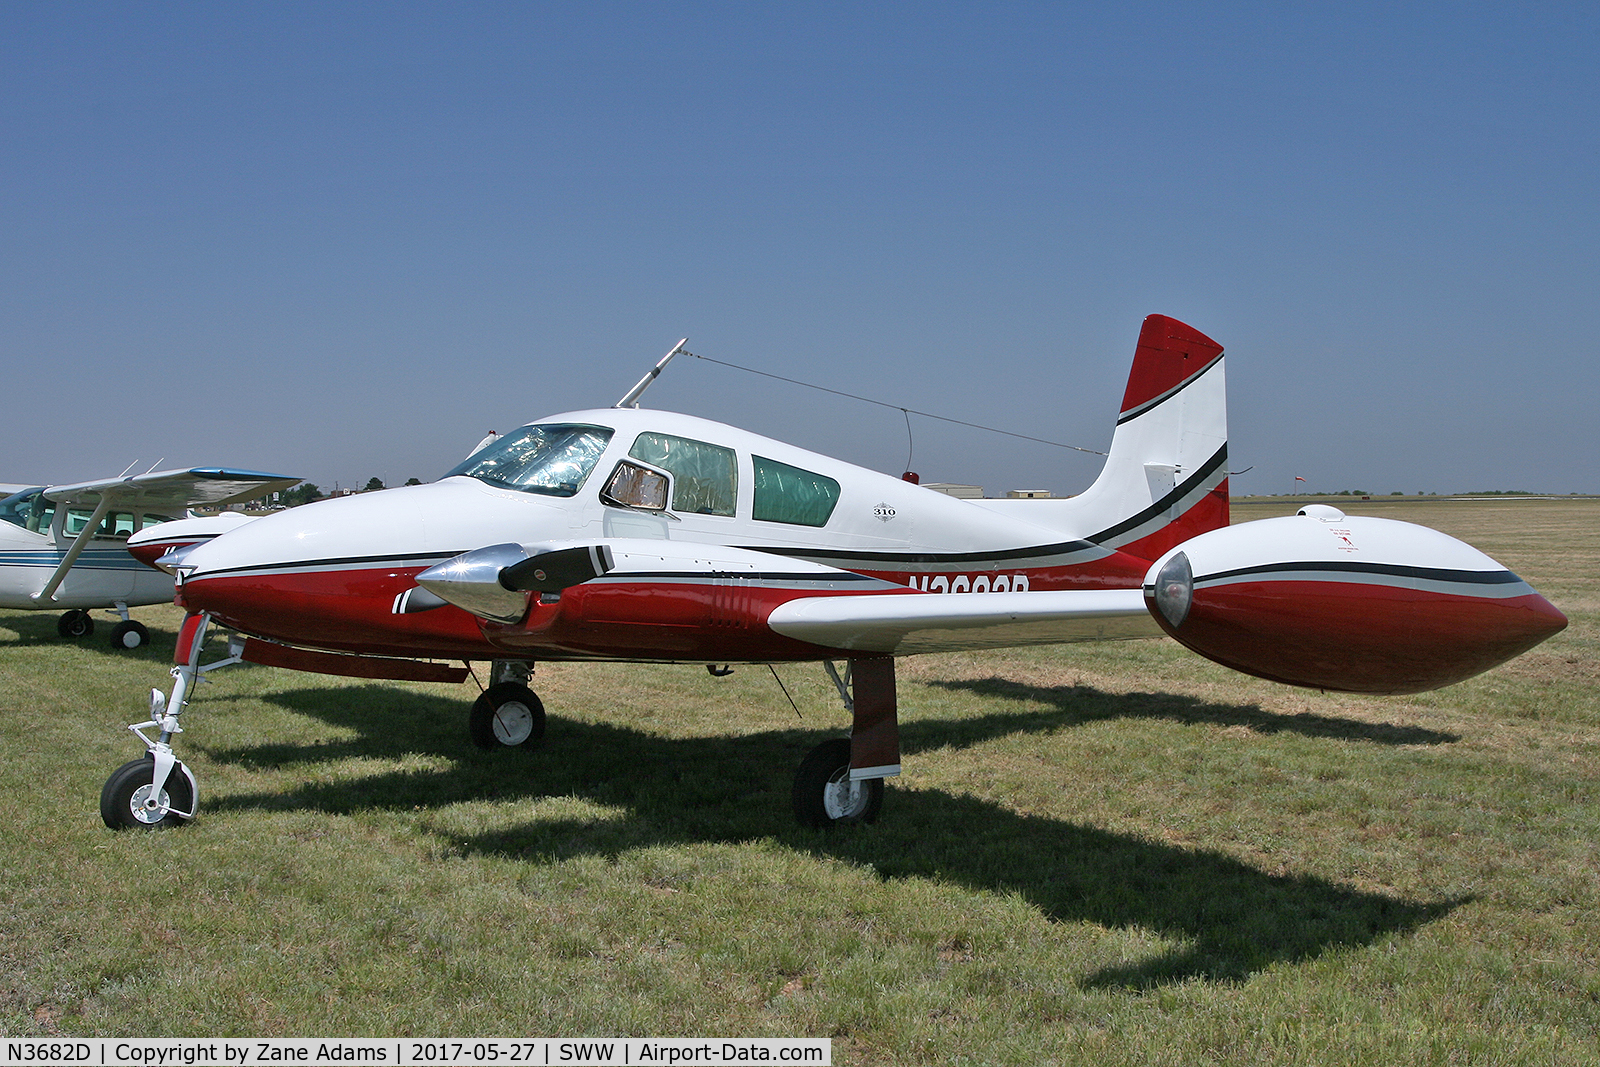 N3682D, 1956 Cessna 310 C/N 35382, Avenger Field, Sweetwater, TX